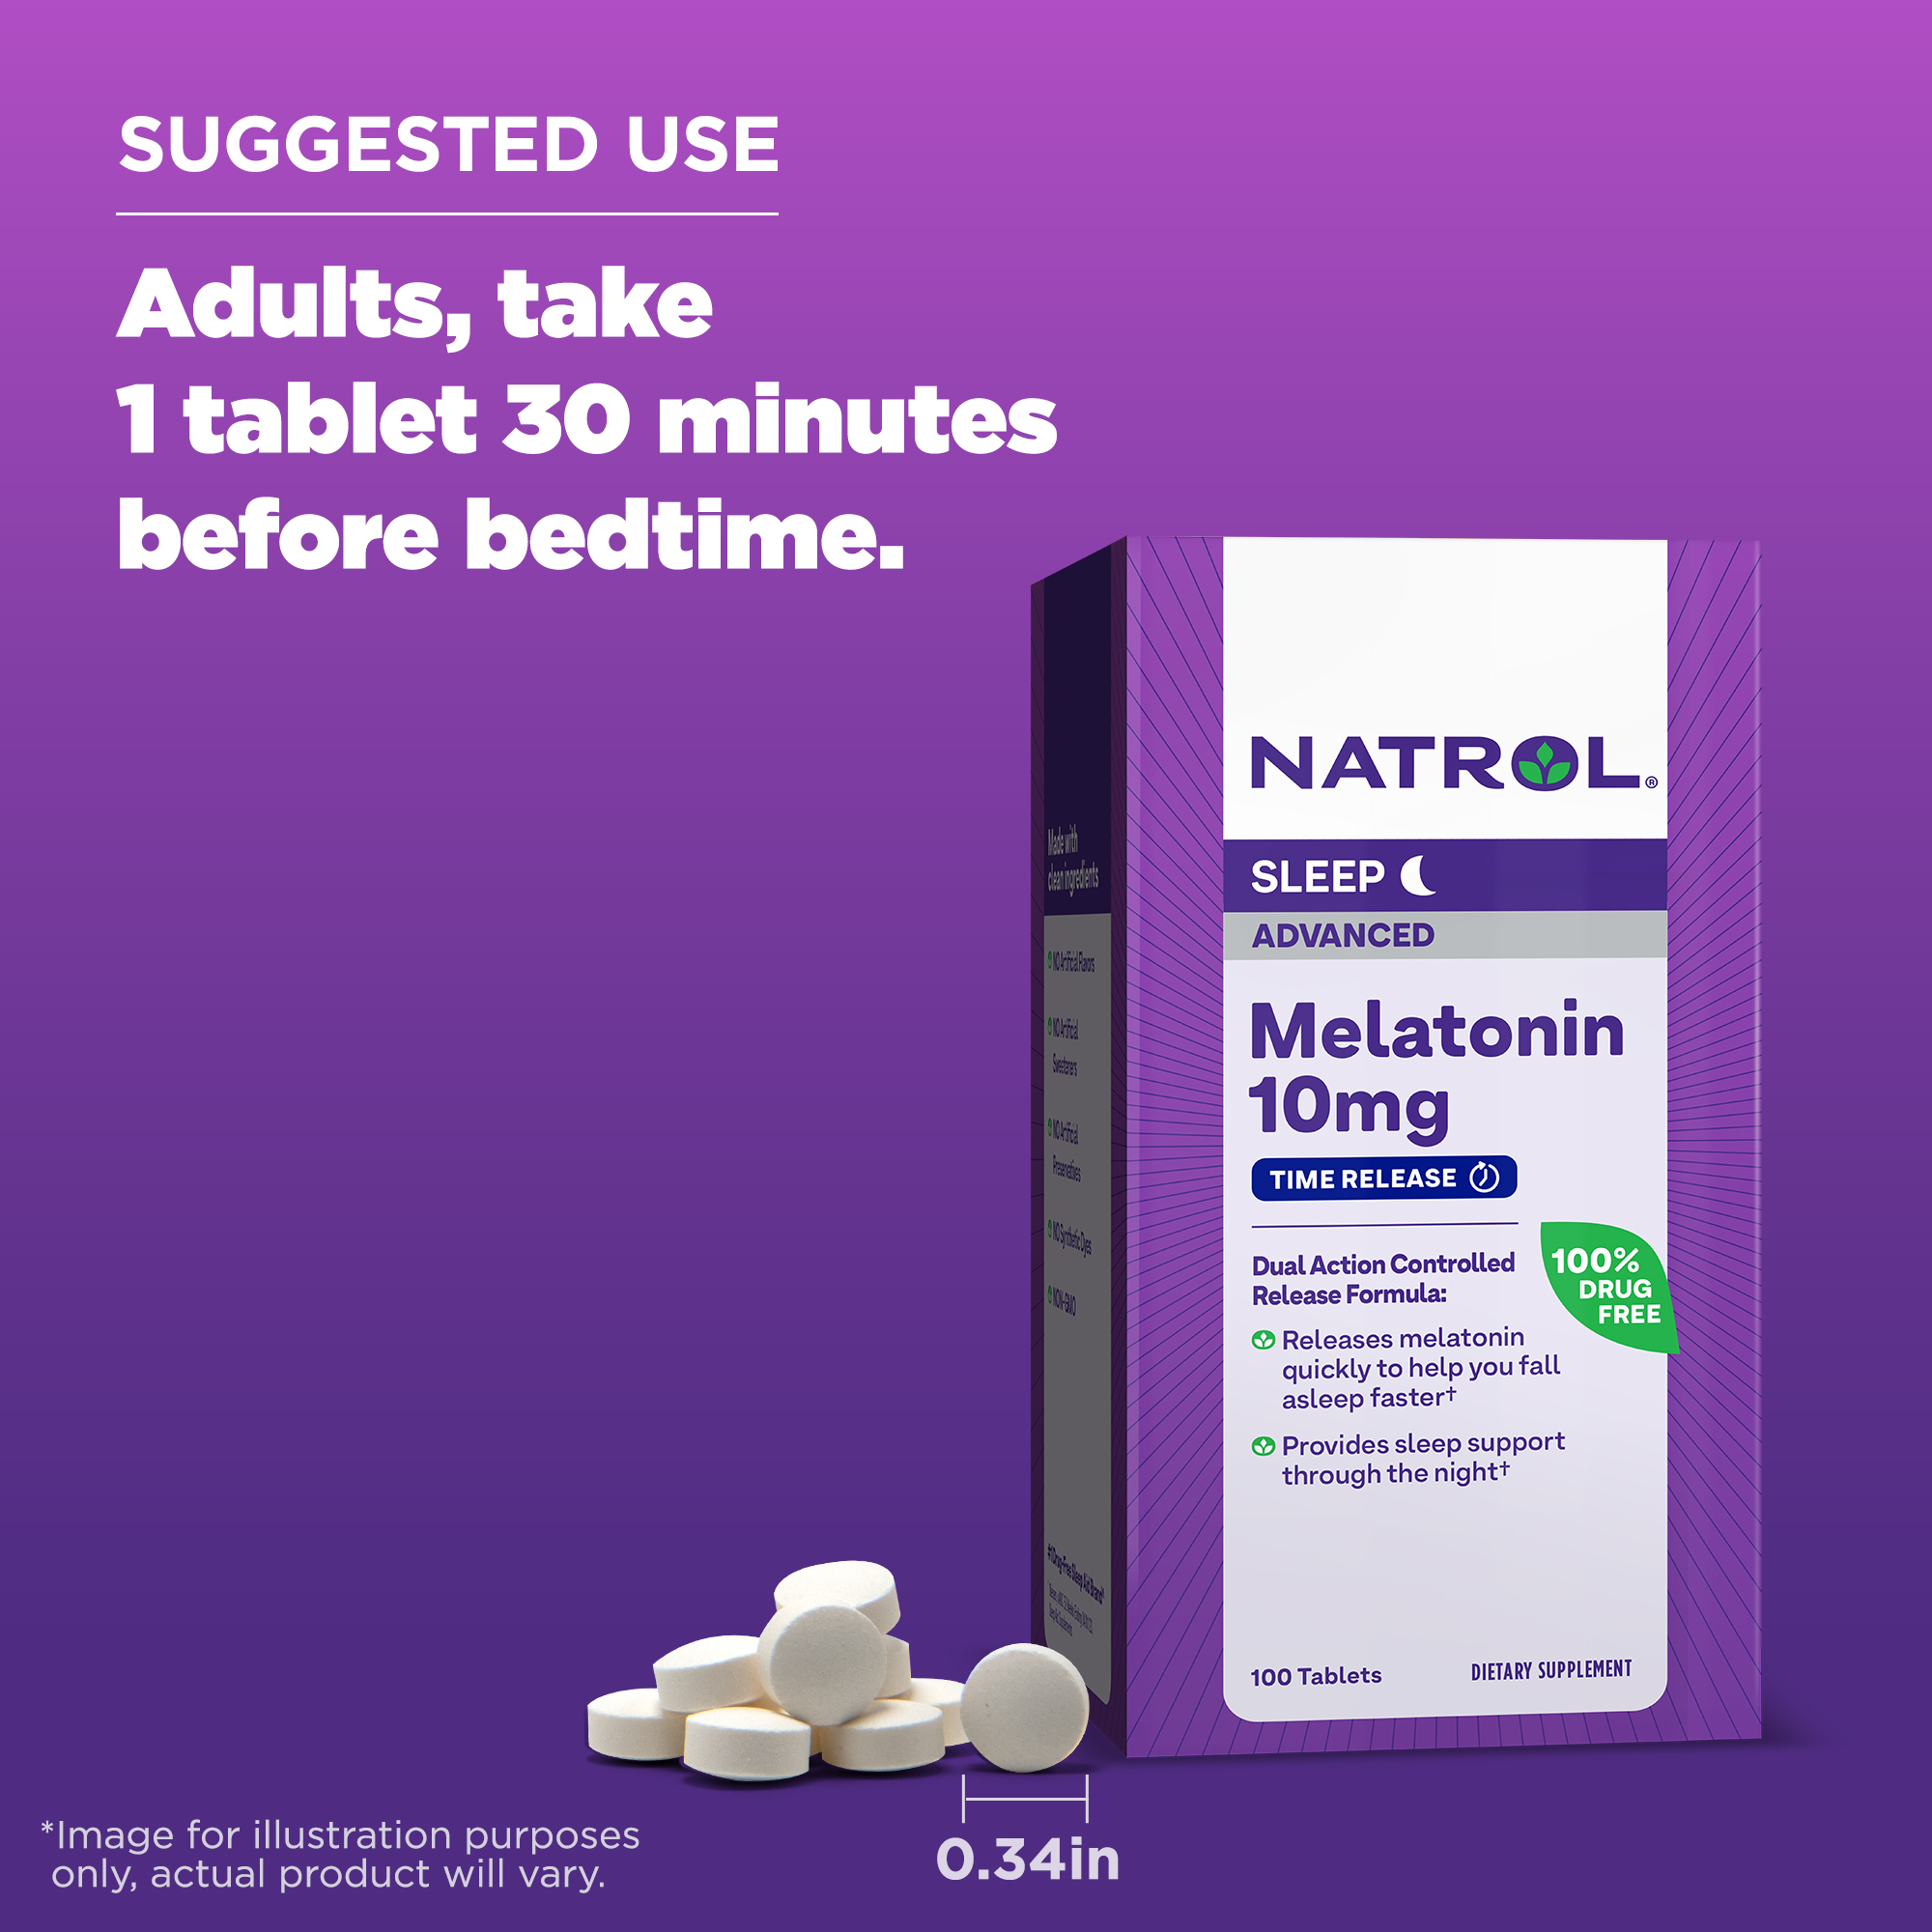 Natrol® Advanced Sleep Melatonin 10mg, Dietary Supplement for Restful Sleep, Time Release Melatonin Tablets, 100 Time-Release Tablets, 100 Day Supply - image 5 of 8